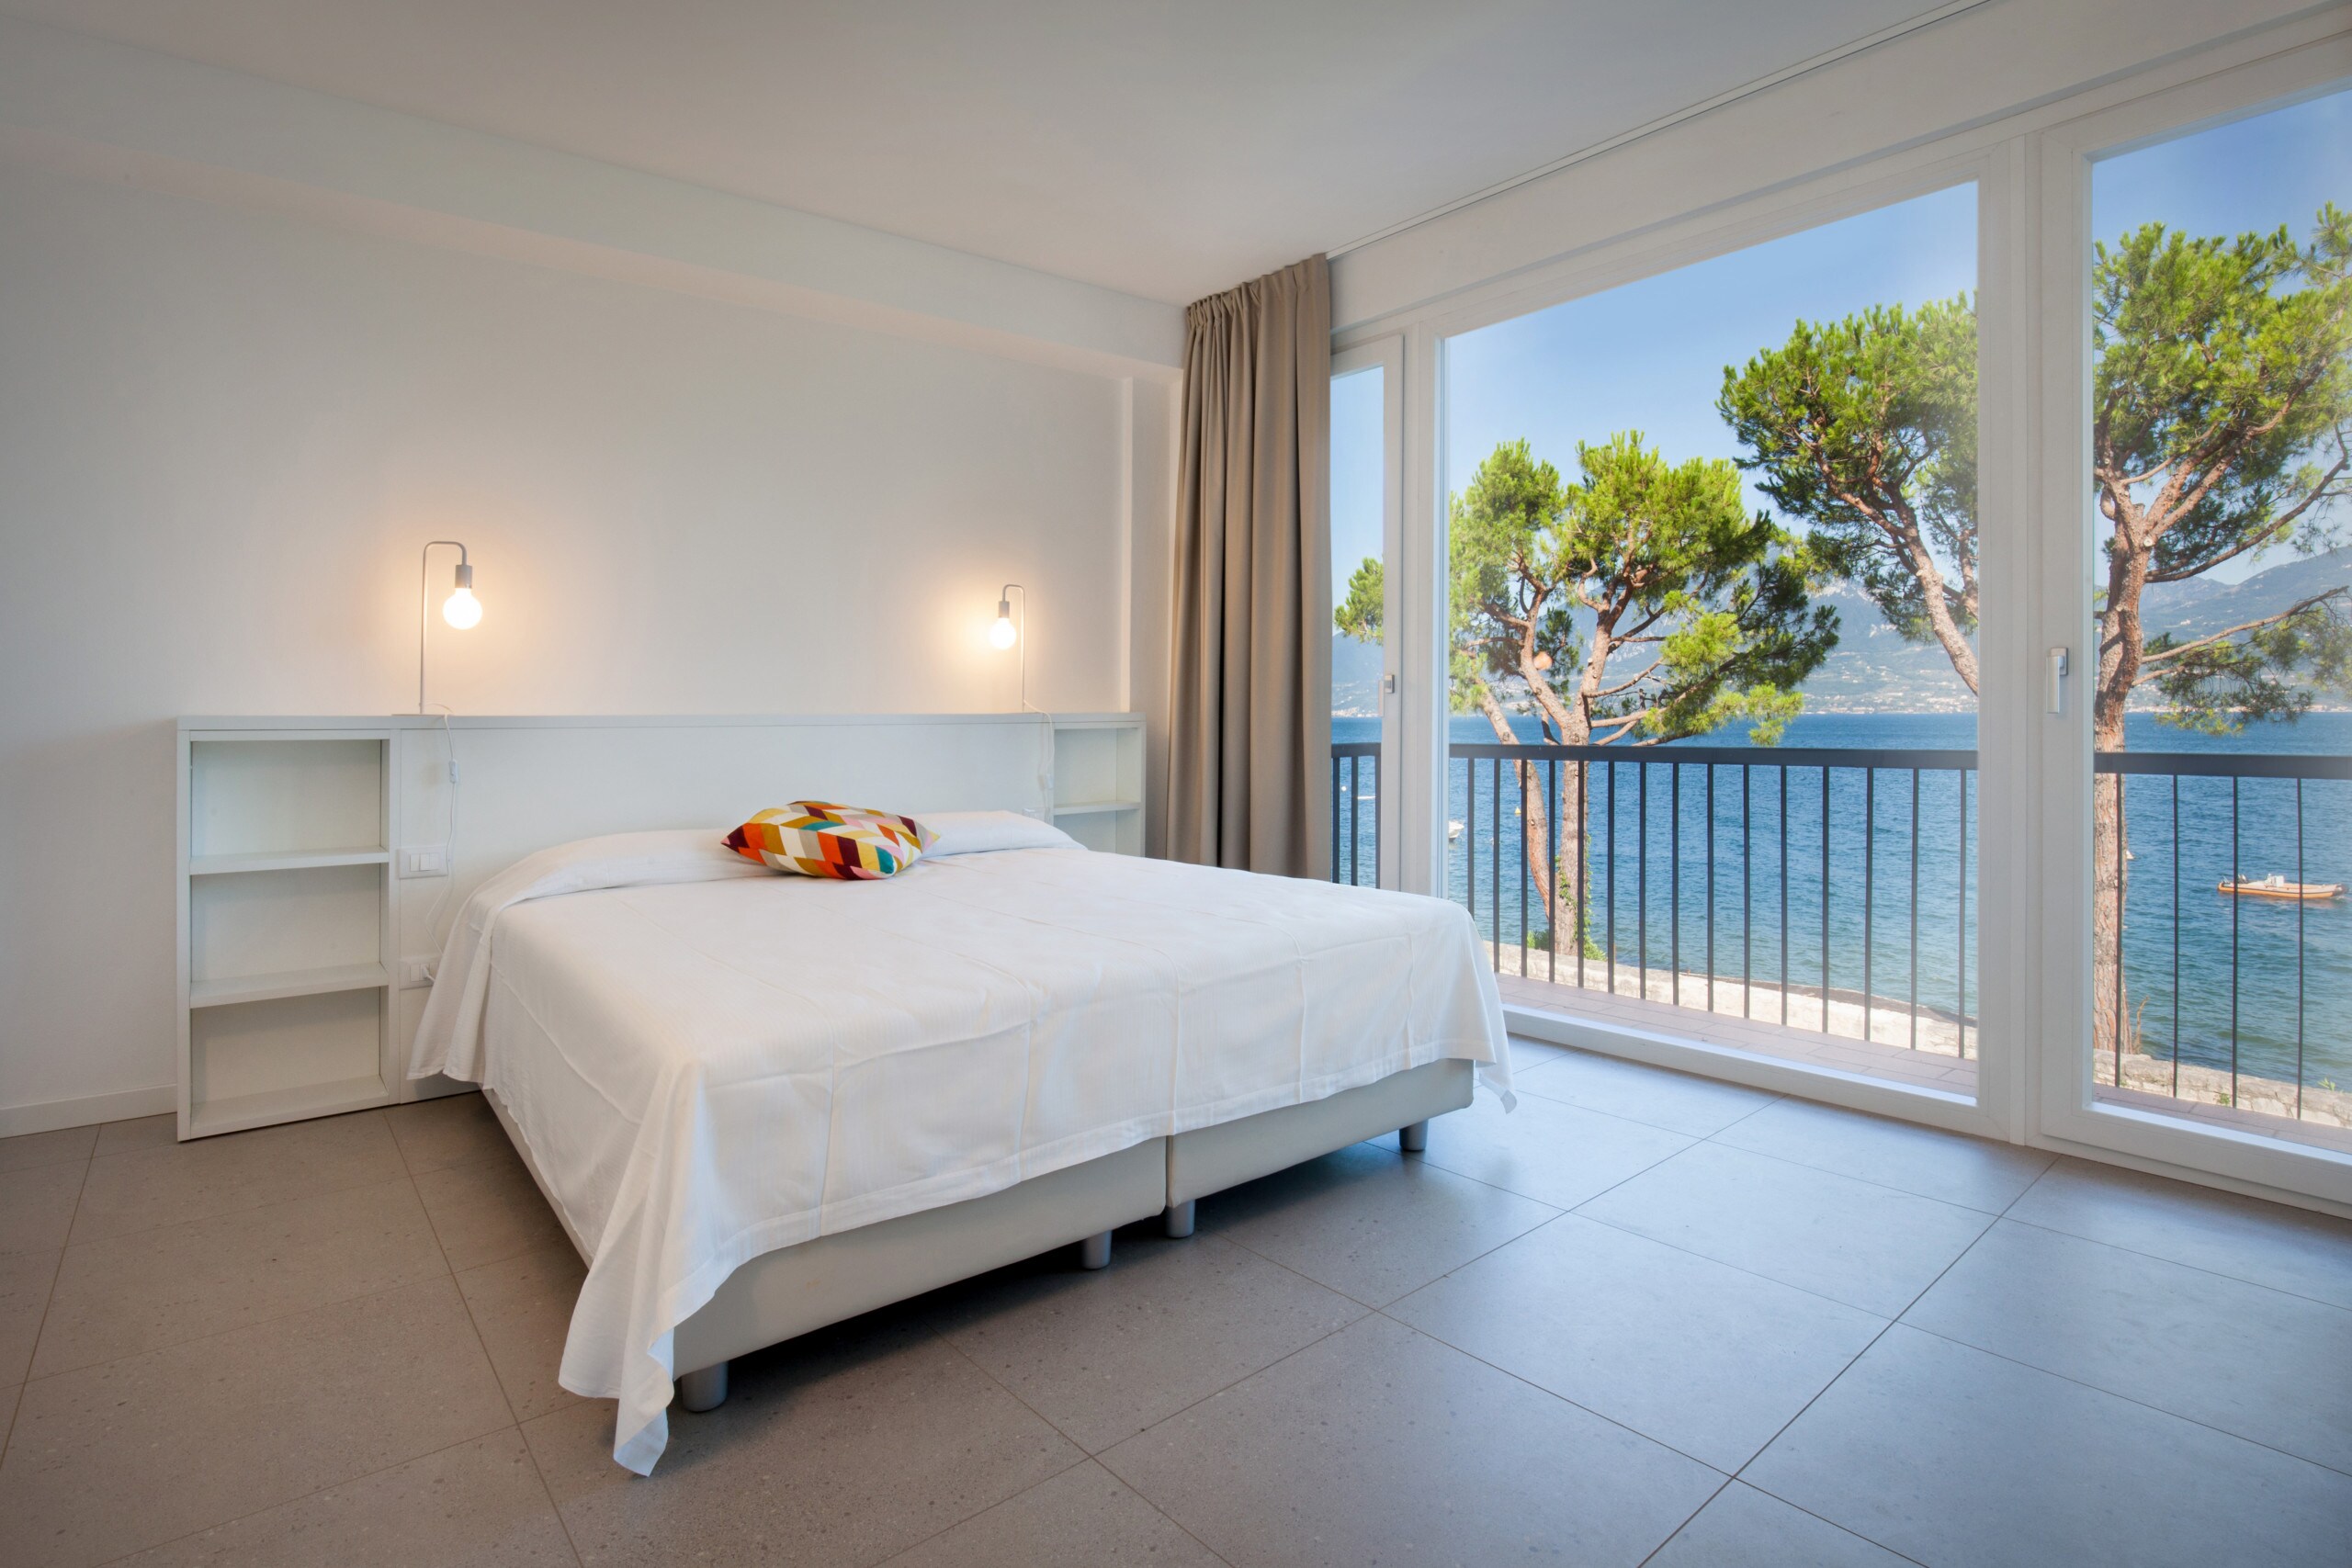 Property Image 1 - 2 Bedroom Apartment in Pai next to Lake Garda